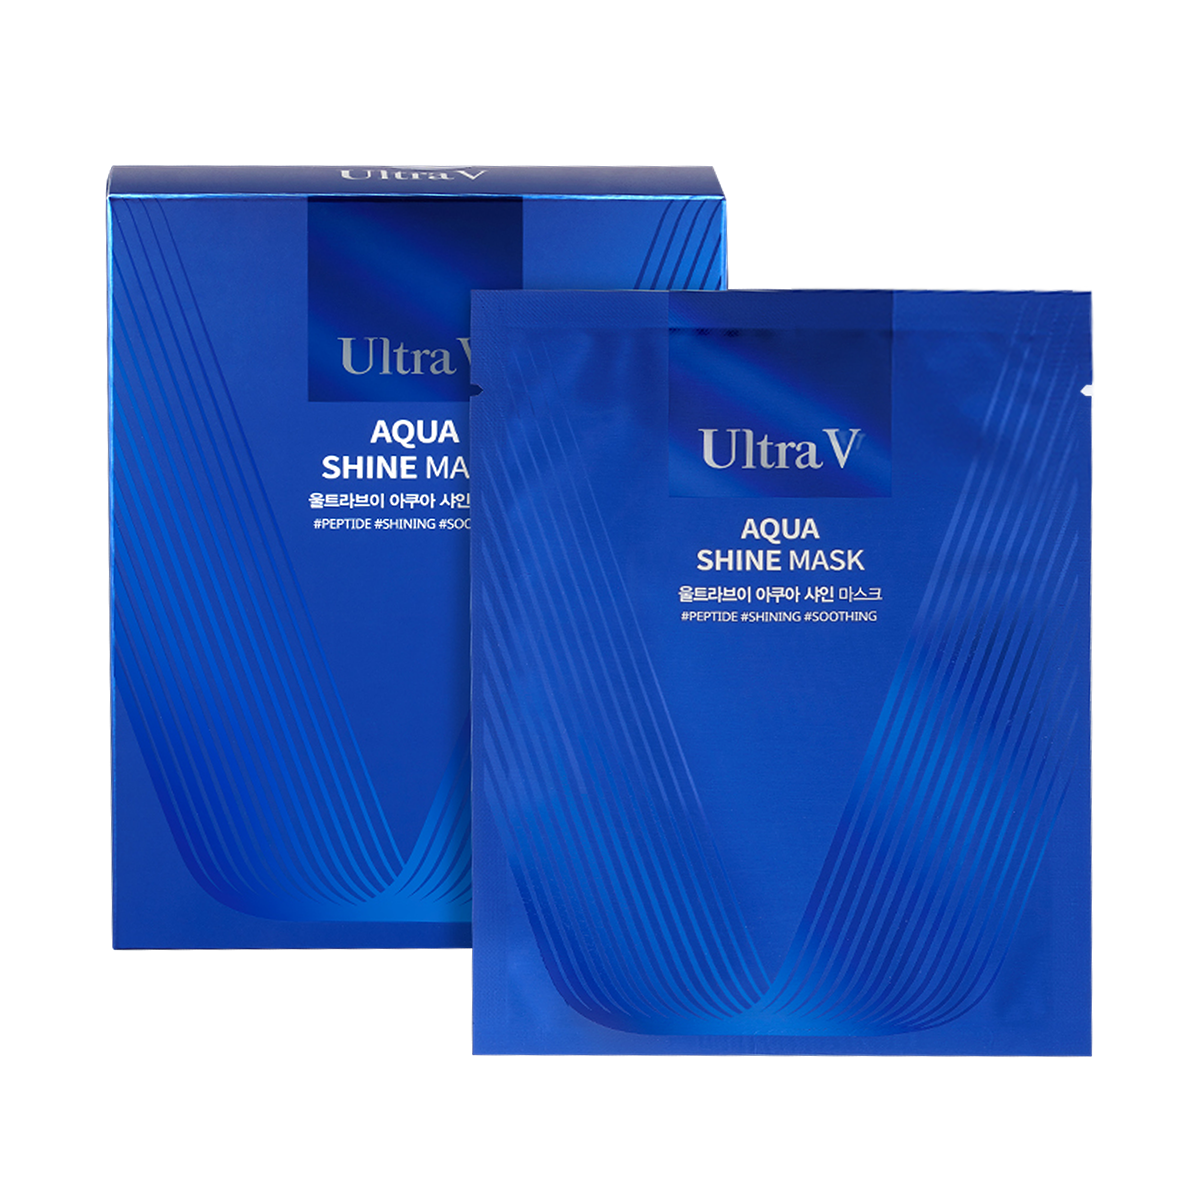 Ultra V Aqua Shine Mask